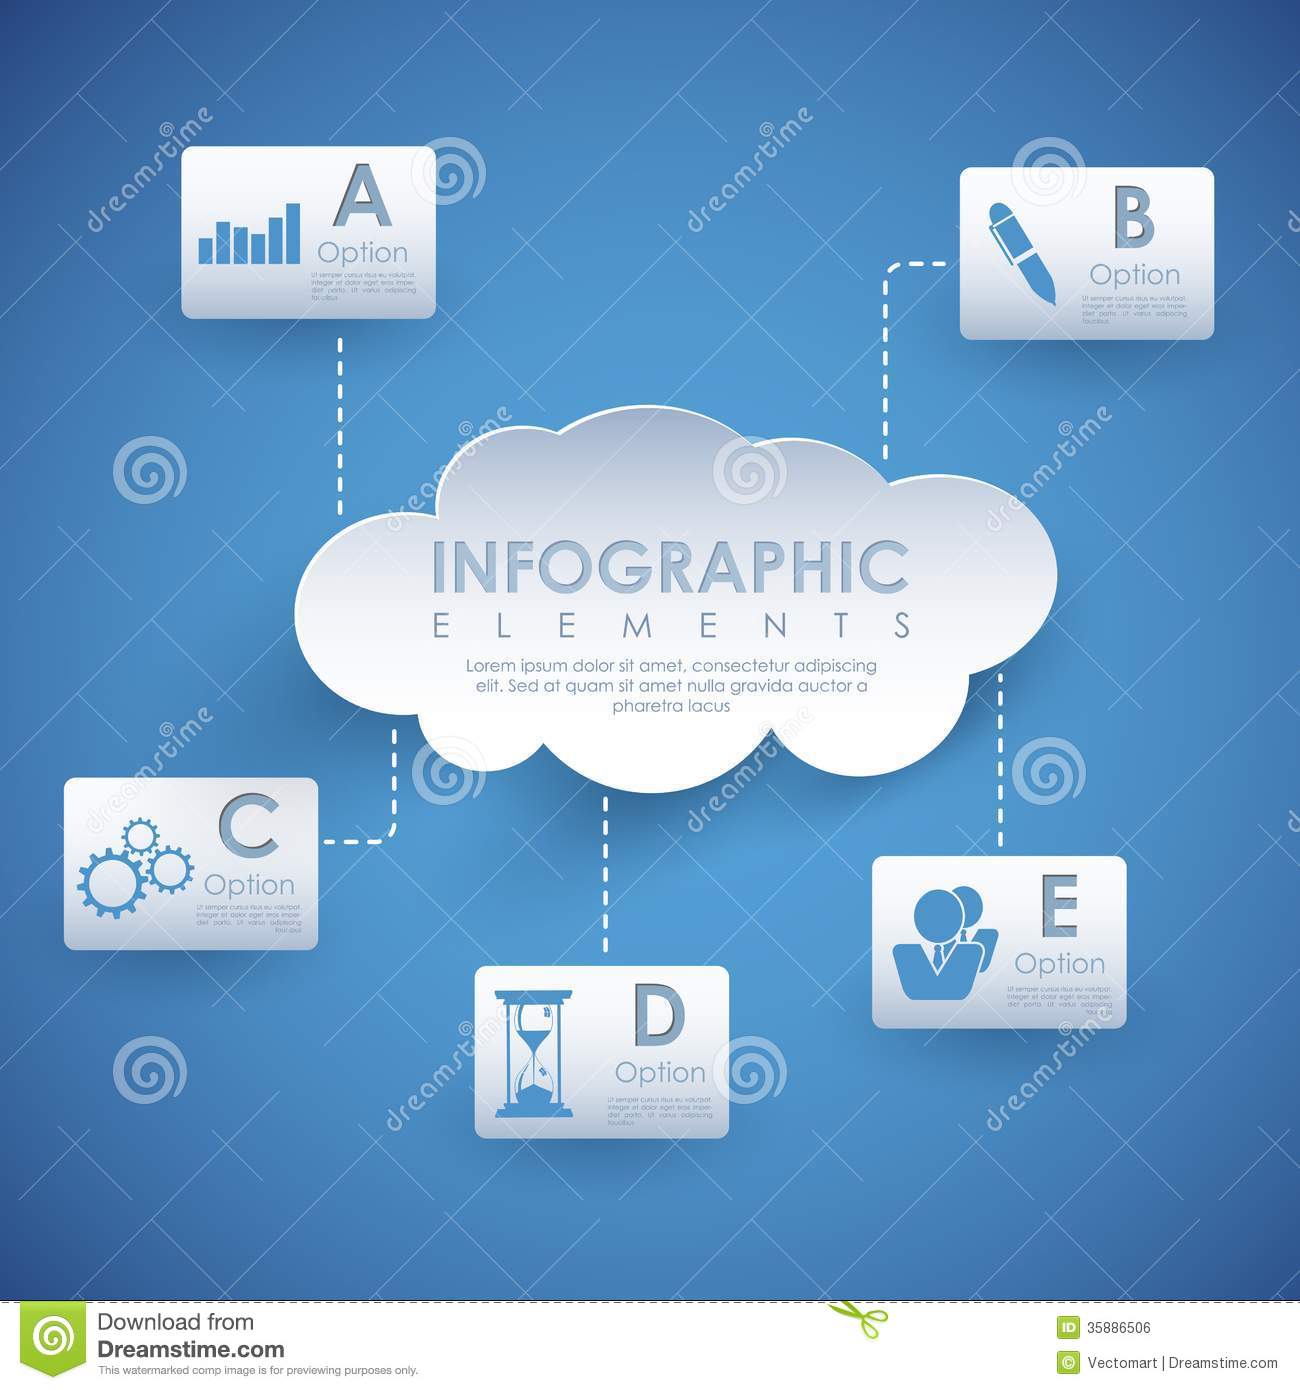 Cloud Computing Royalty Free Stock Image   Image  35886506